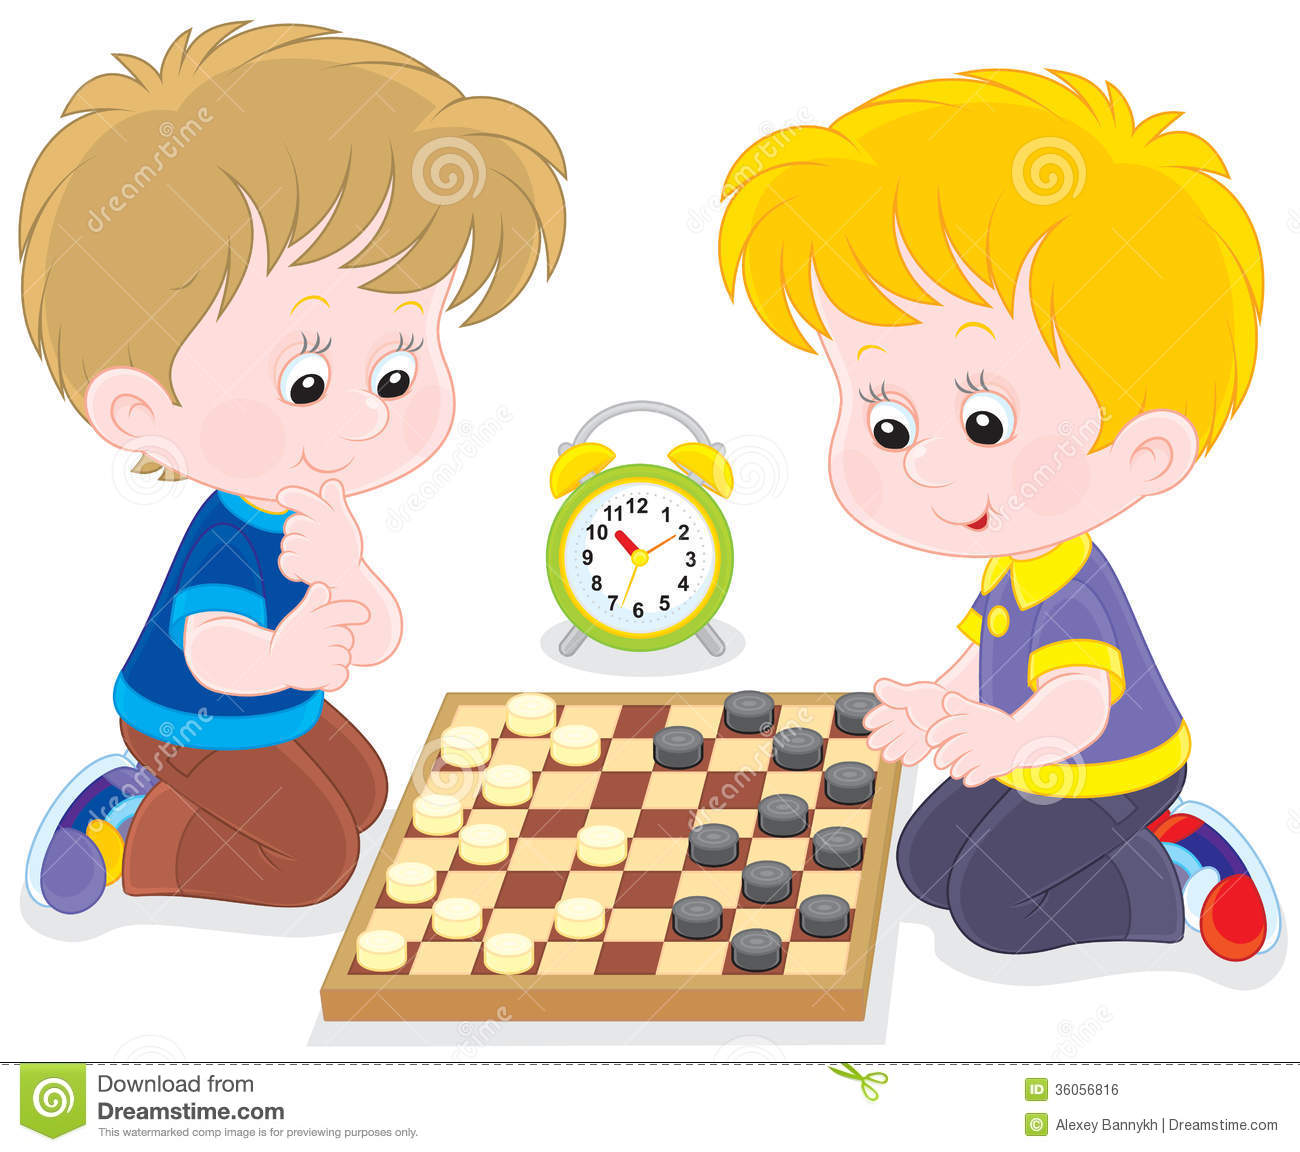 Chess clipart kid chess, Chess kid chess Transparent FREE